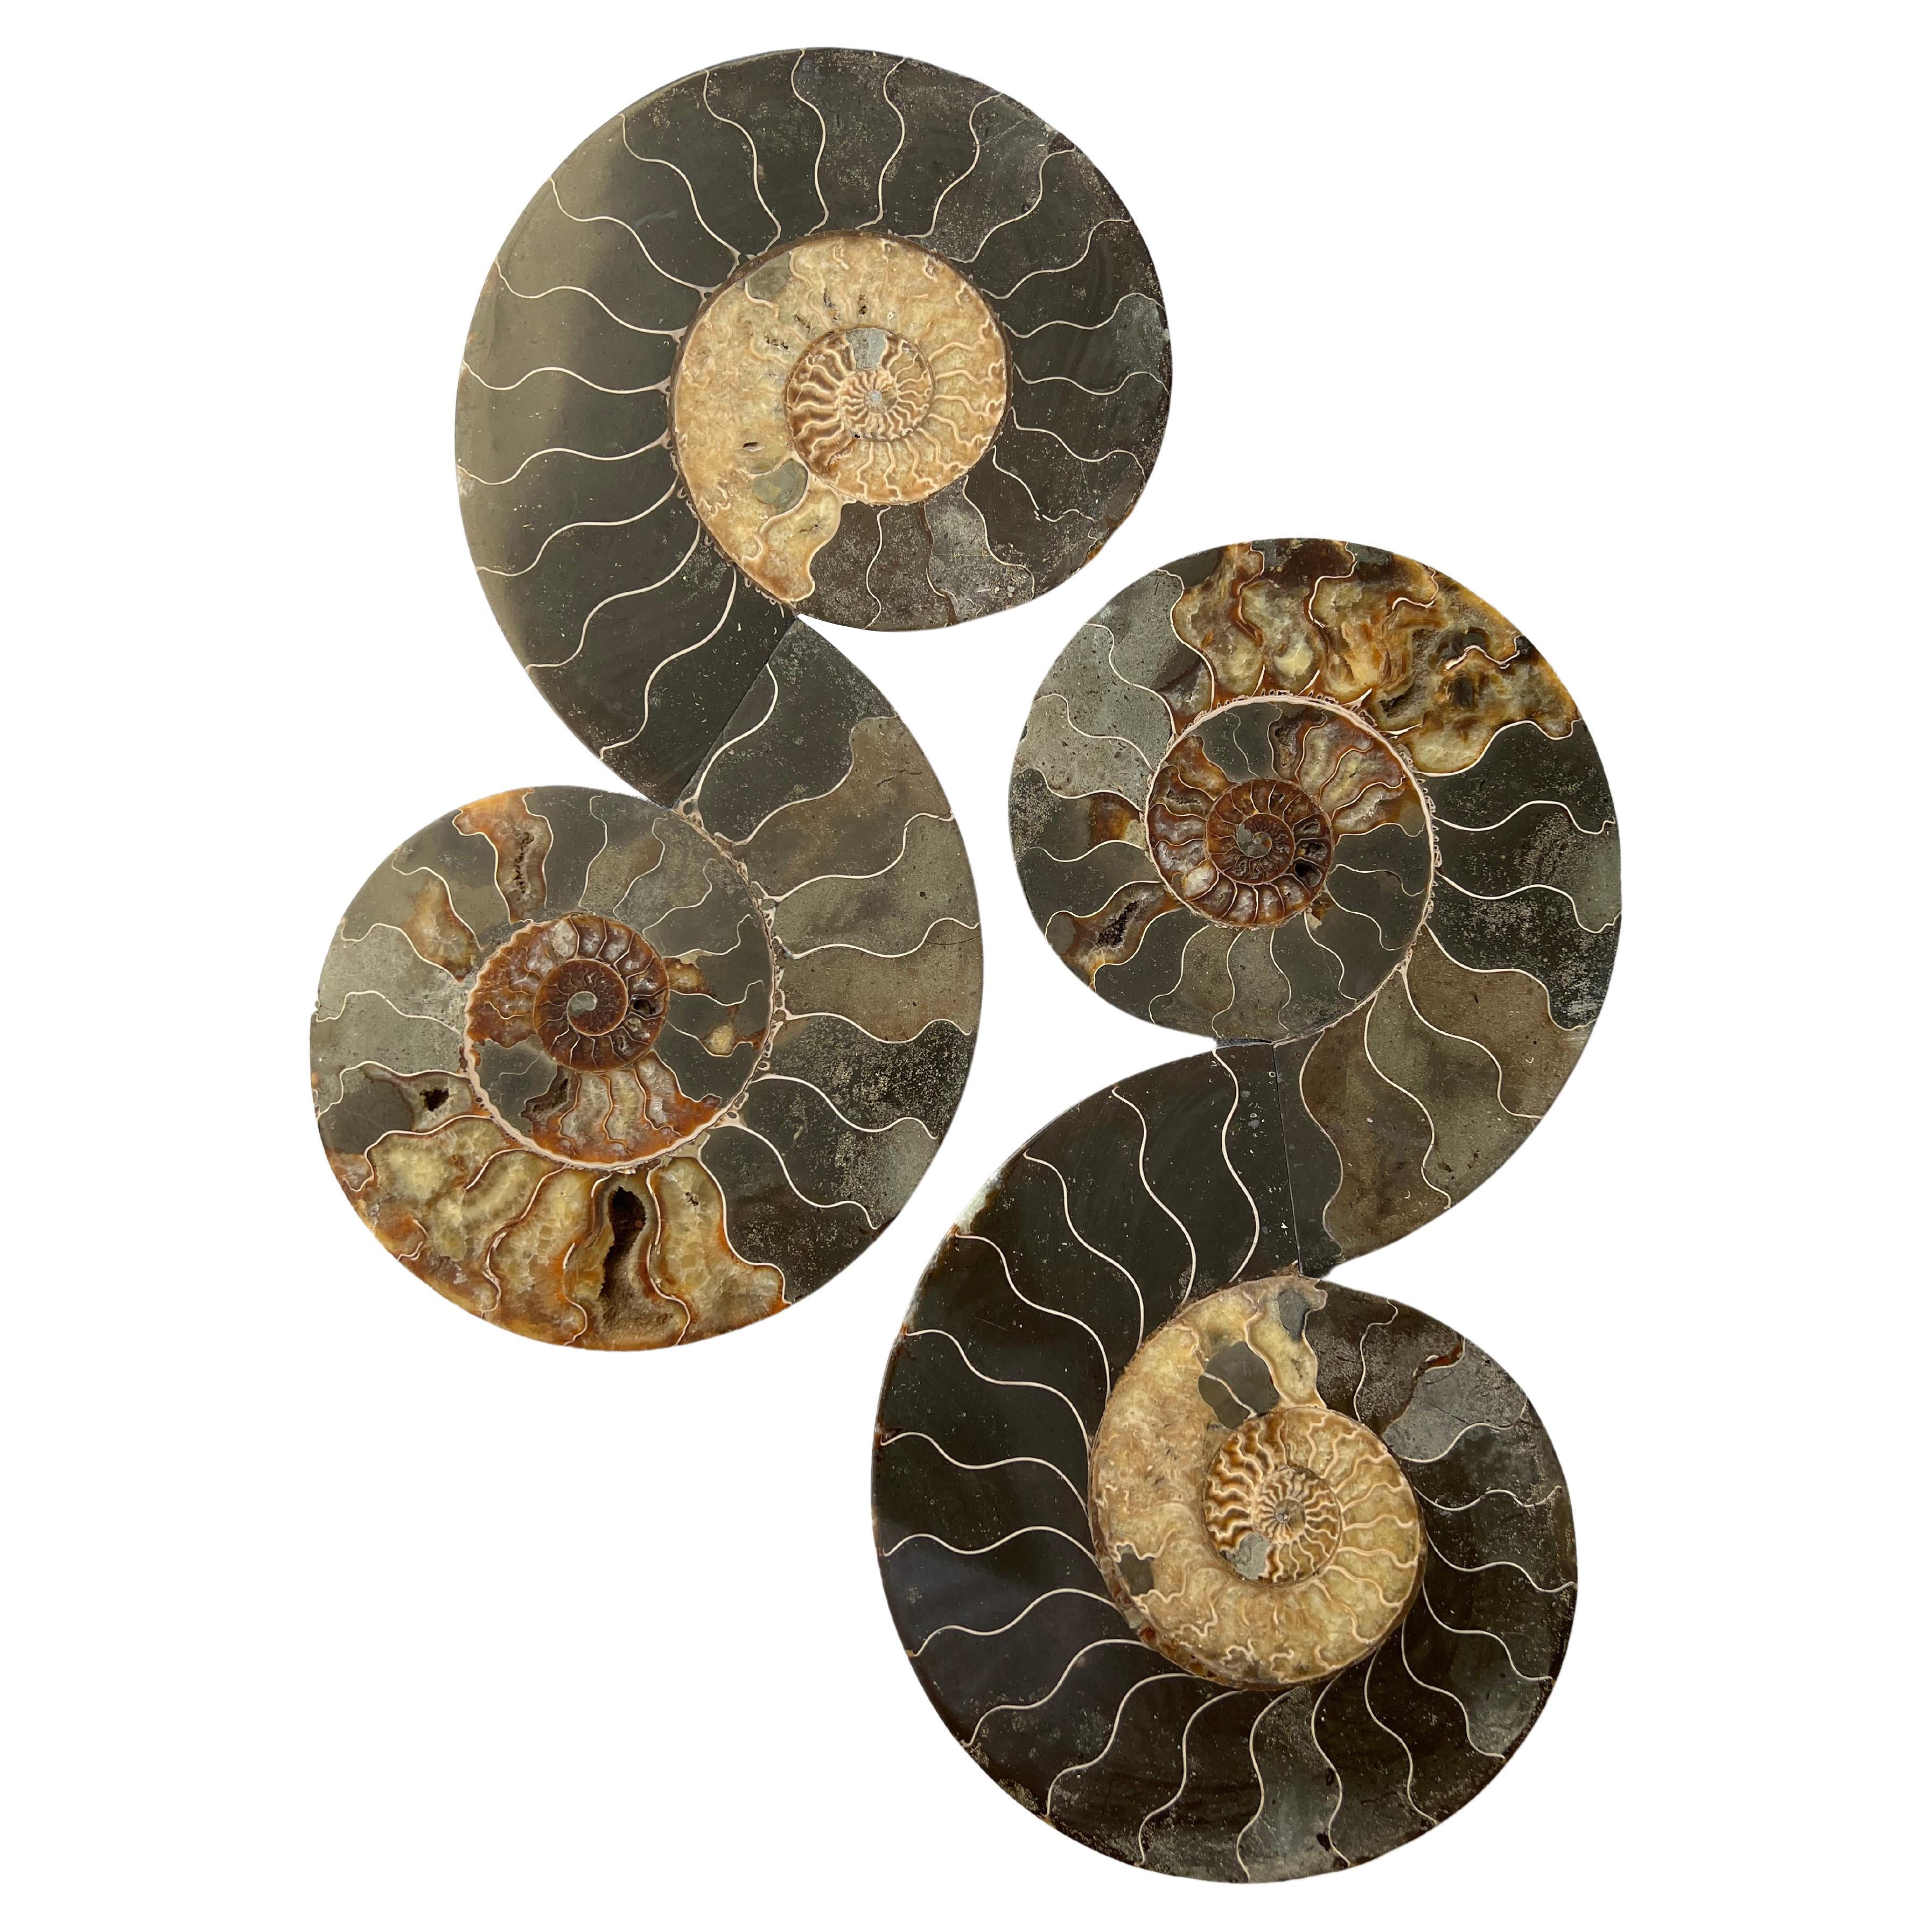 Ammonite Convolutions Sculptures by Mary Brōgger